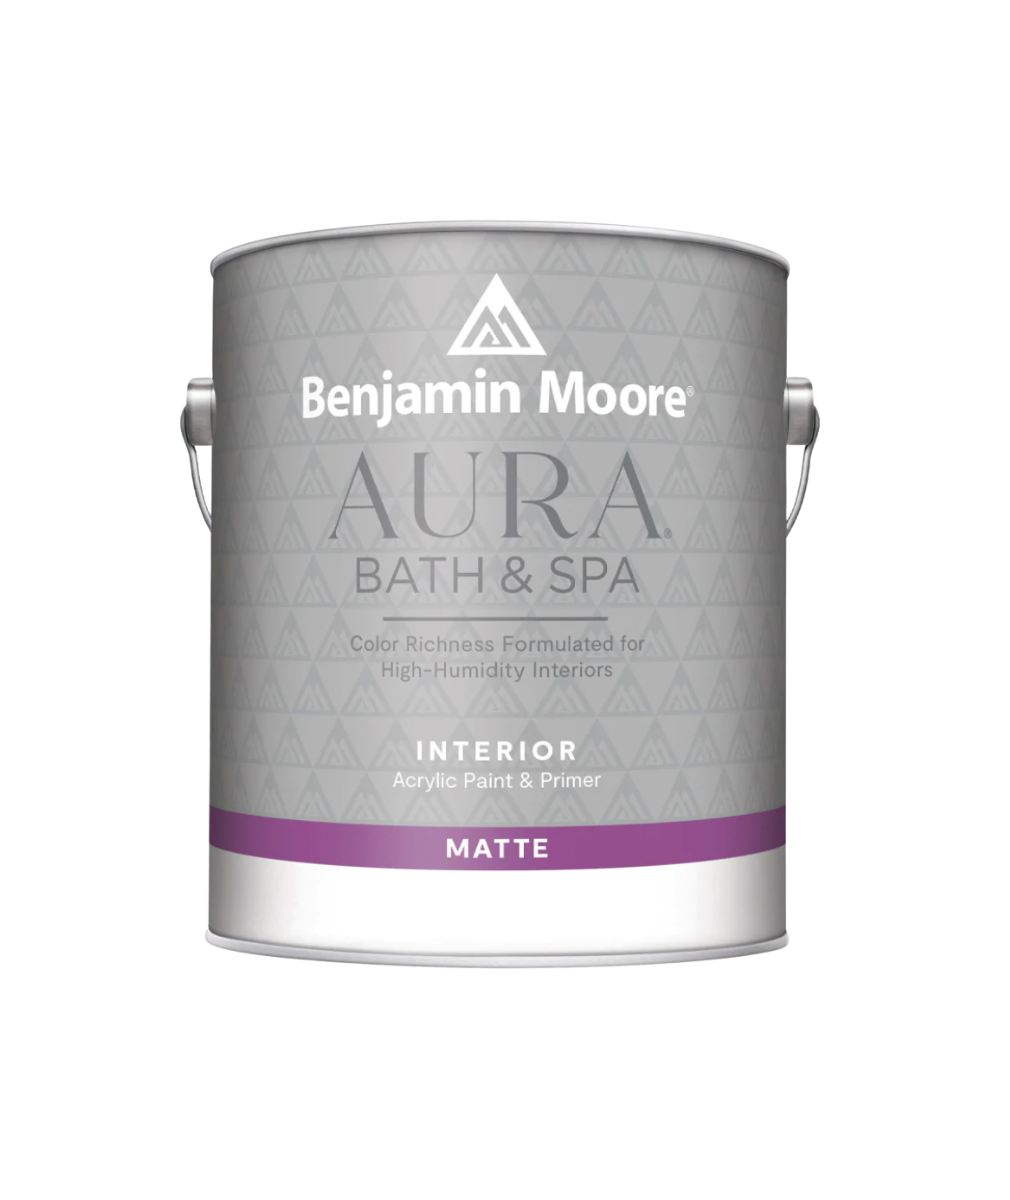 Benjamin Moore Aura Bath & Spa Interior Paint available at Wallauer Paint & Design.